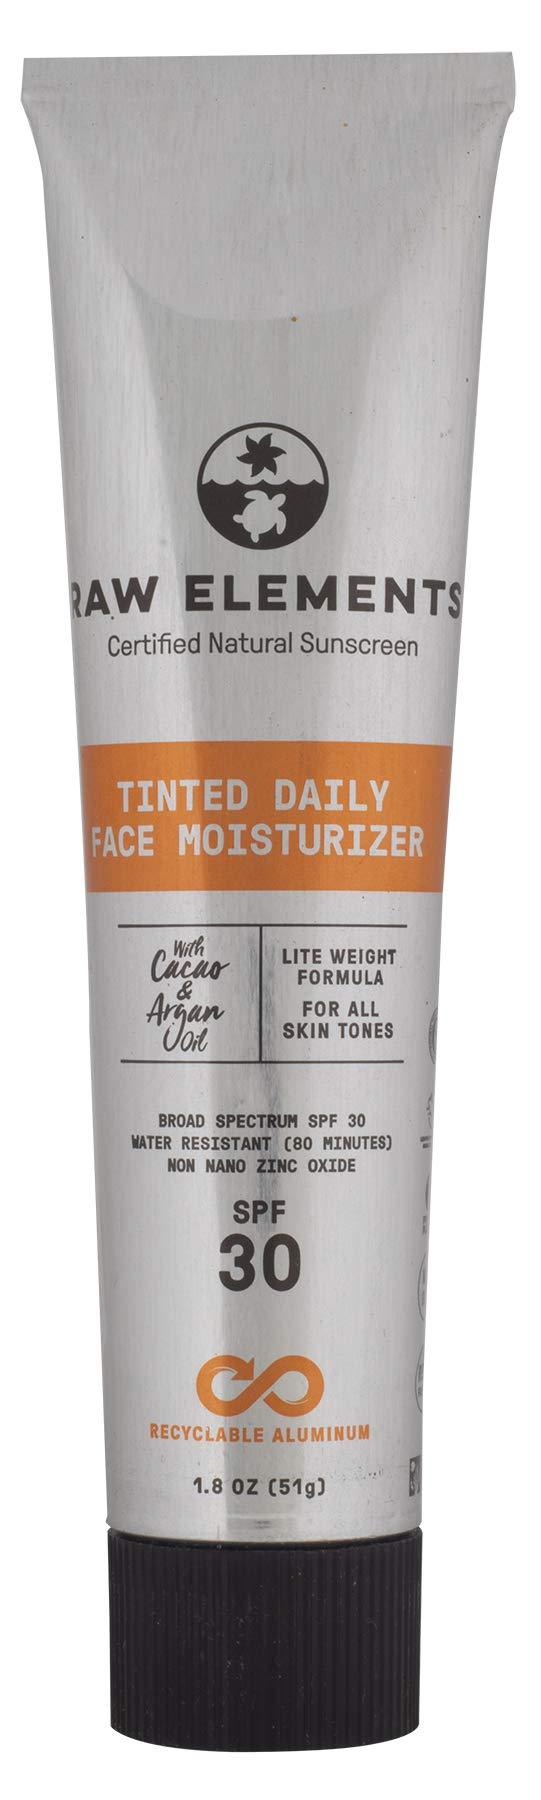 Raw Elements Tinted Daily Face Moisturizer Certified Natural Sunscreen | Non-Nano Zinc Oxide, 95% Organic, Reef Safe, SPF 30, Lightweight Formula in Aluminum Tube, 1.8oz - BeesActive Australia